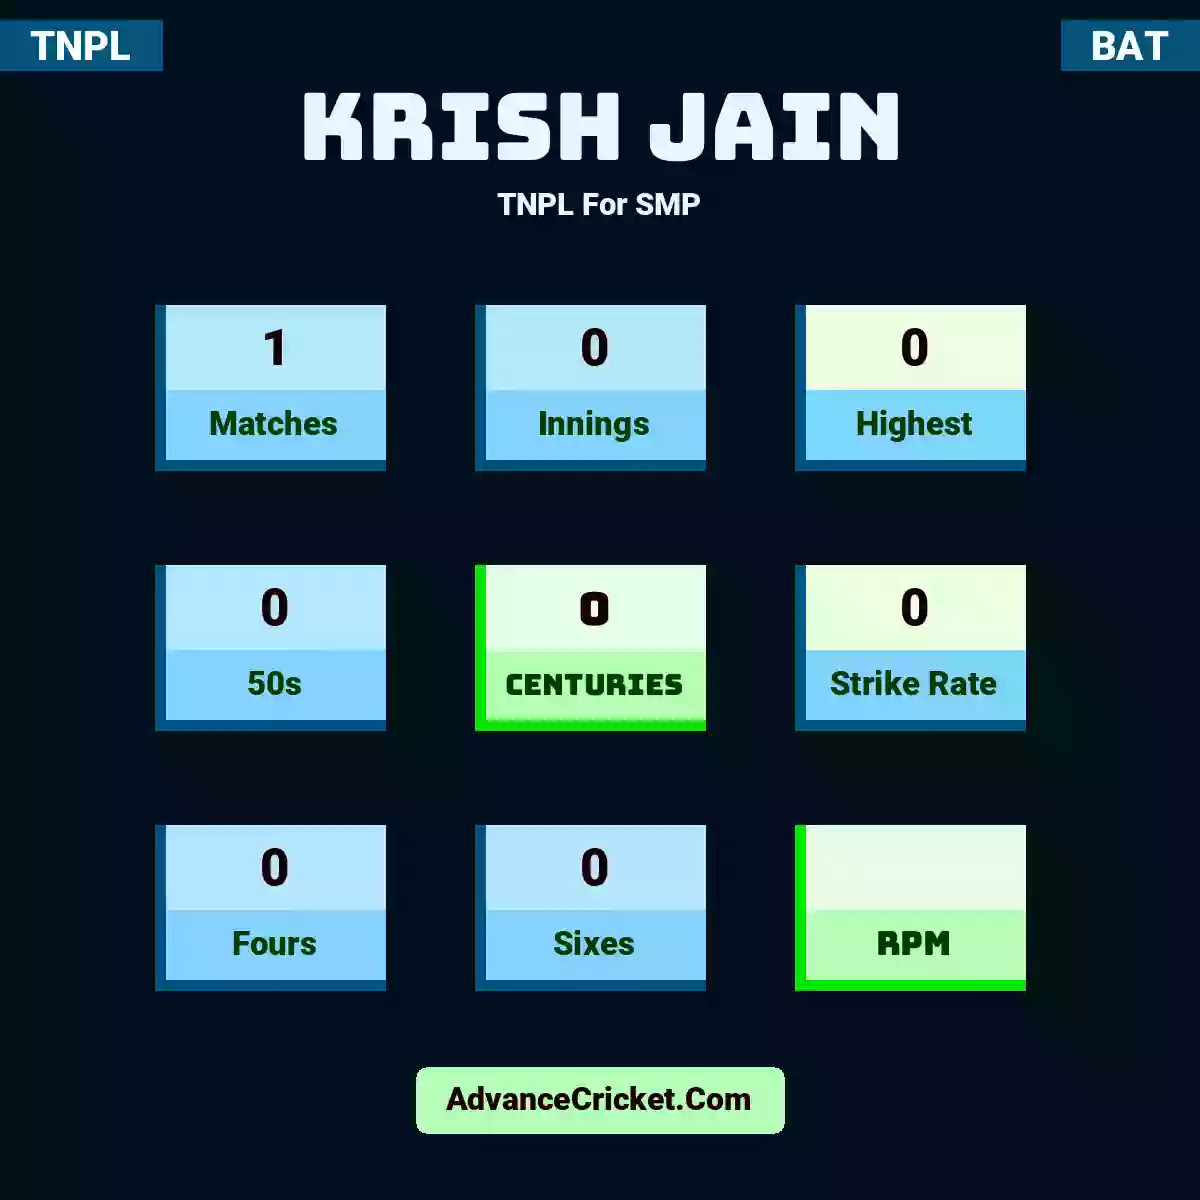 Krish Jain TNPL  For SMP, Krish Jain played 1 matches, scored 0 runs as highest, 0 half-centuries, and 0 centuries, with a strike rate of 0. K.Jain hit 0 fours and 0 sixes.